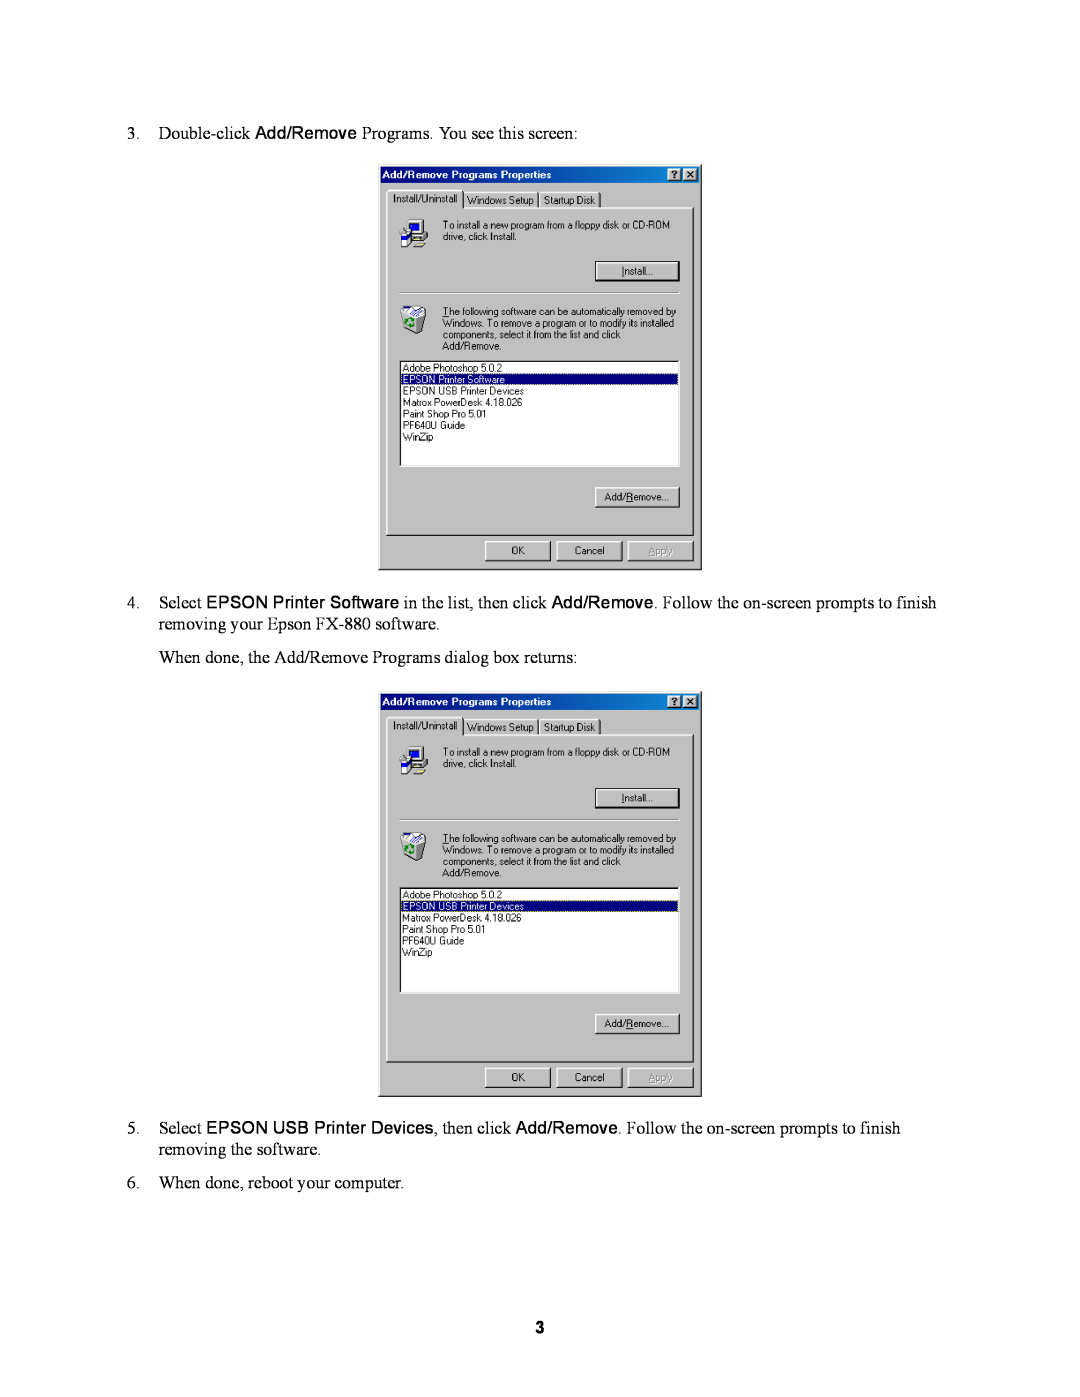 Garmin FX-880 Double-click Add/Remove Programs. You see this screen, When done, the Add/Remove Programs dialog box returns 